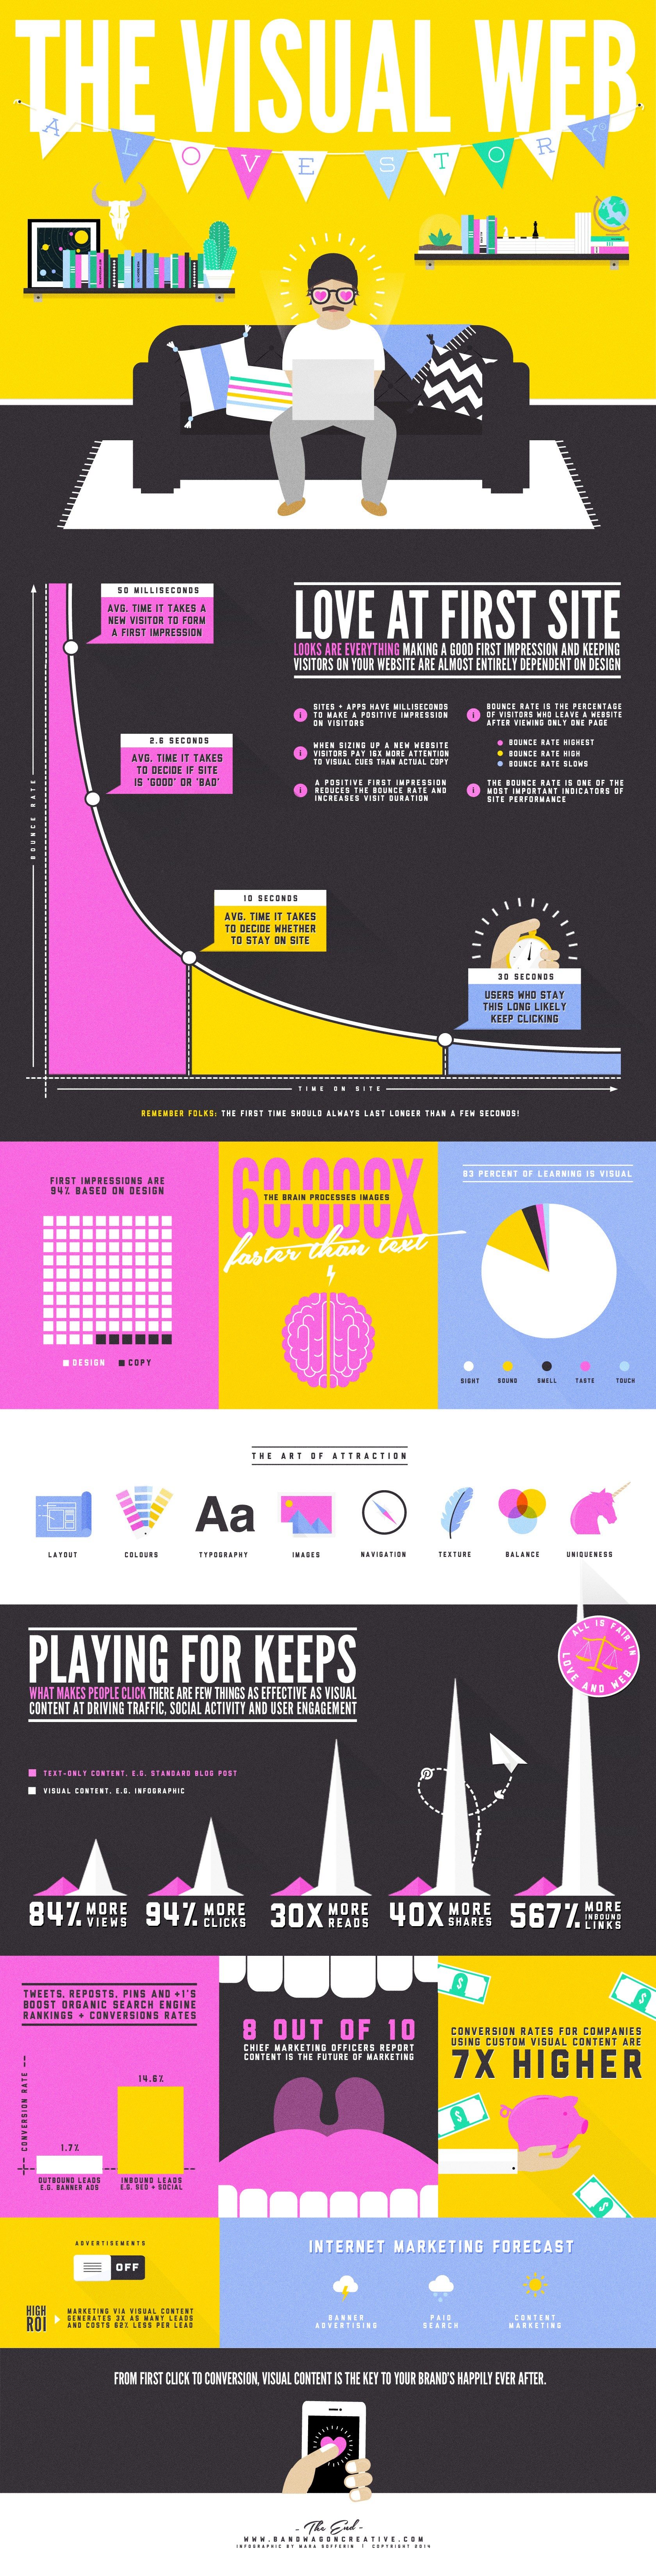 visual web infographic